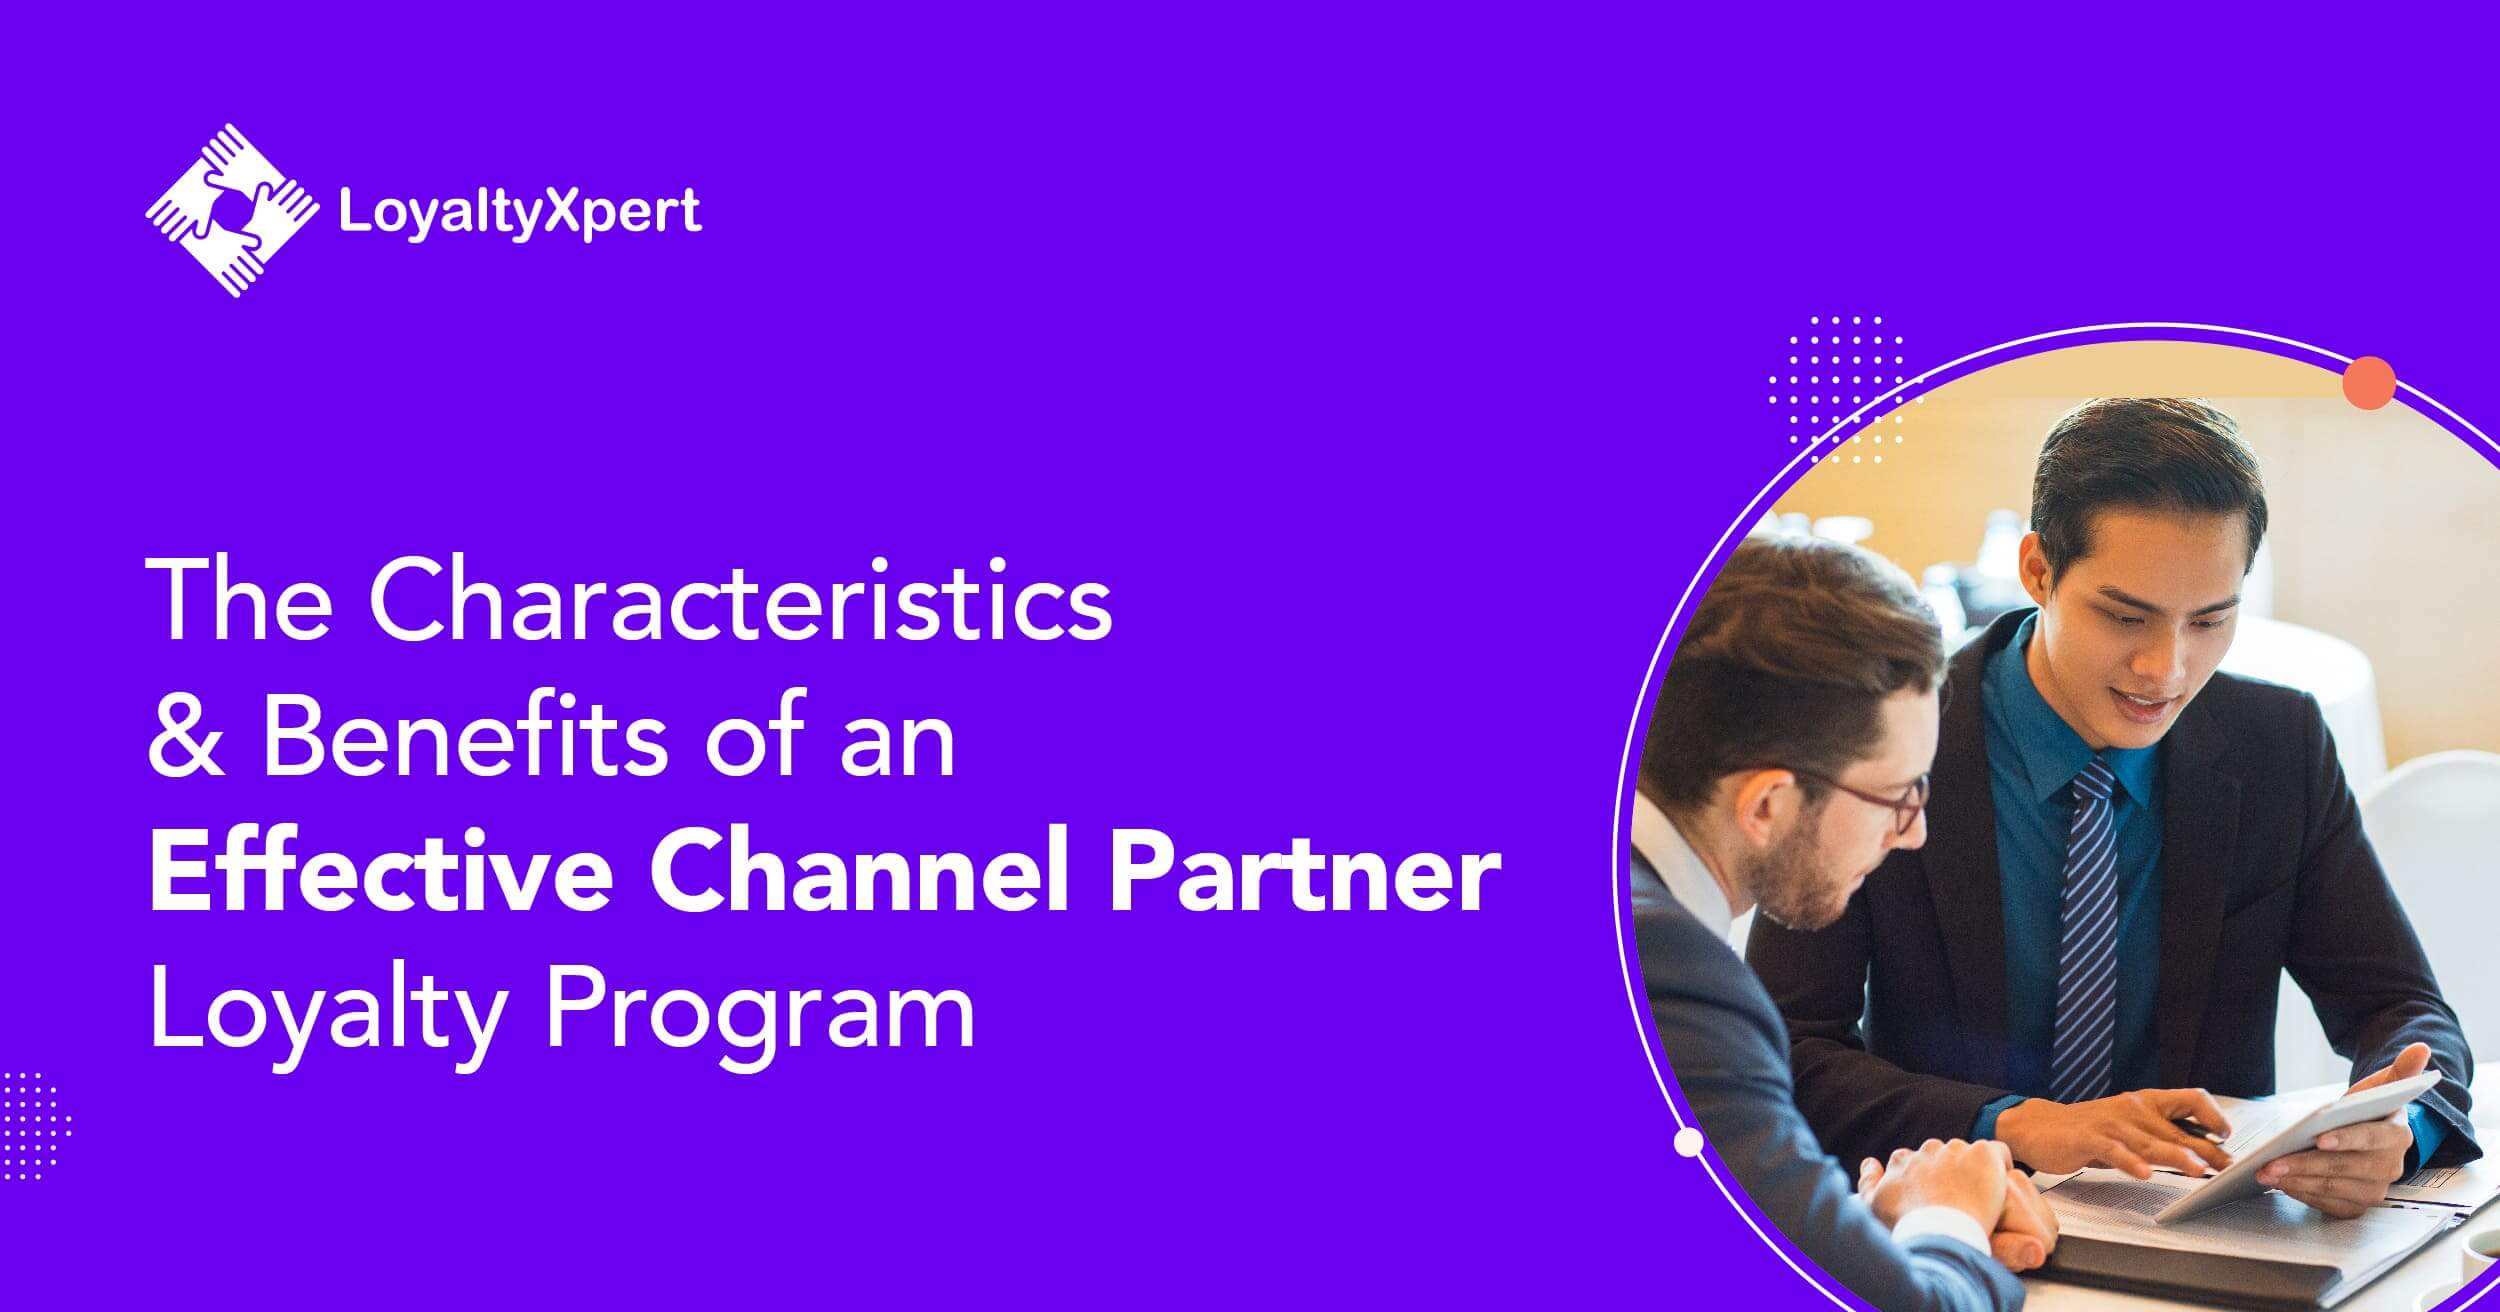 "Effective Channel Partner Loyalty program